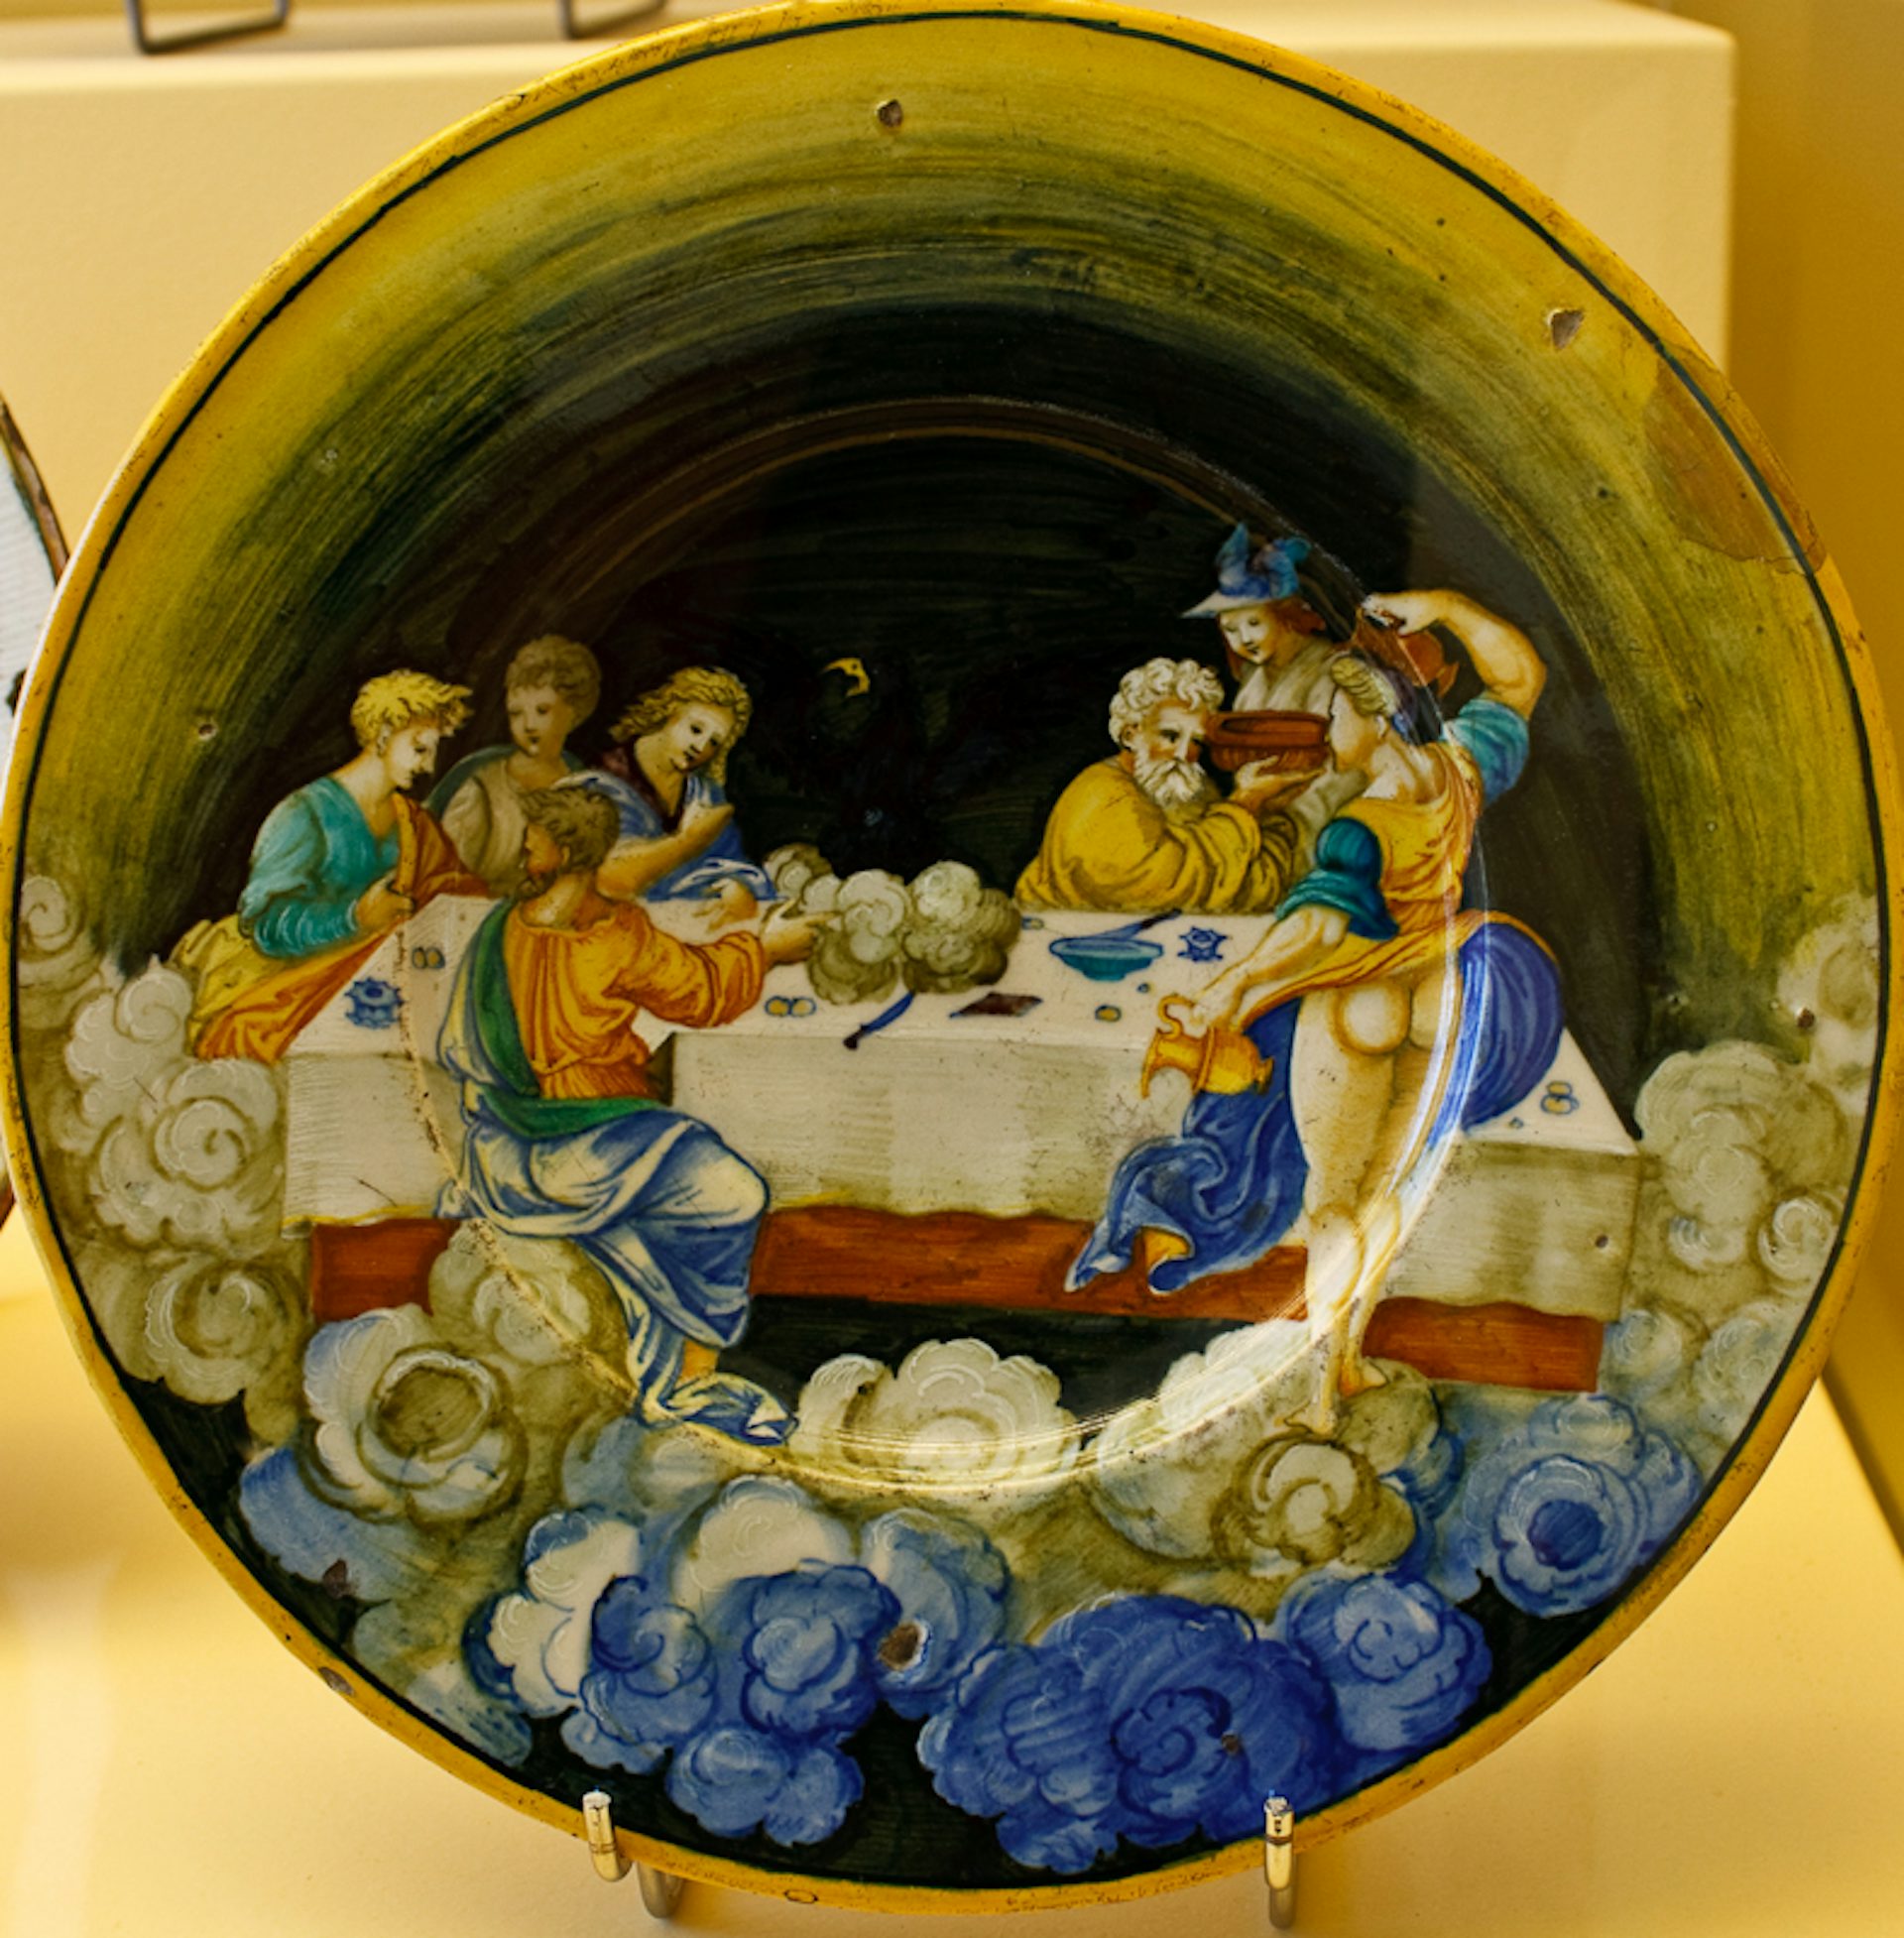 The Food of the Gods on Olympus. Dish attributed to Nicola da Urbino (ca. 1530)